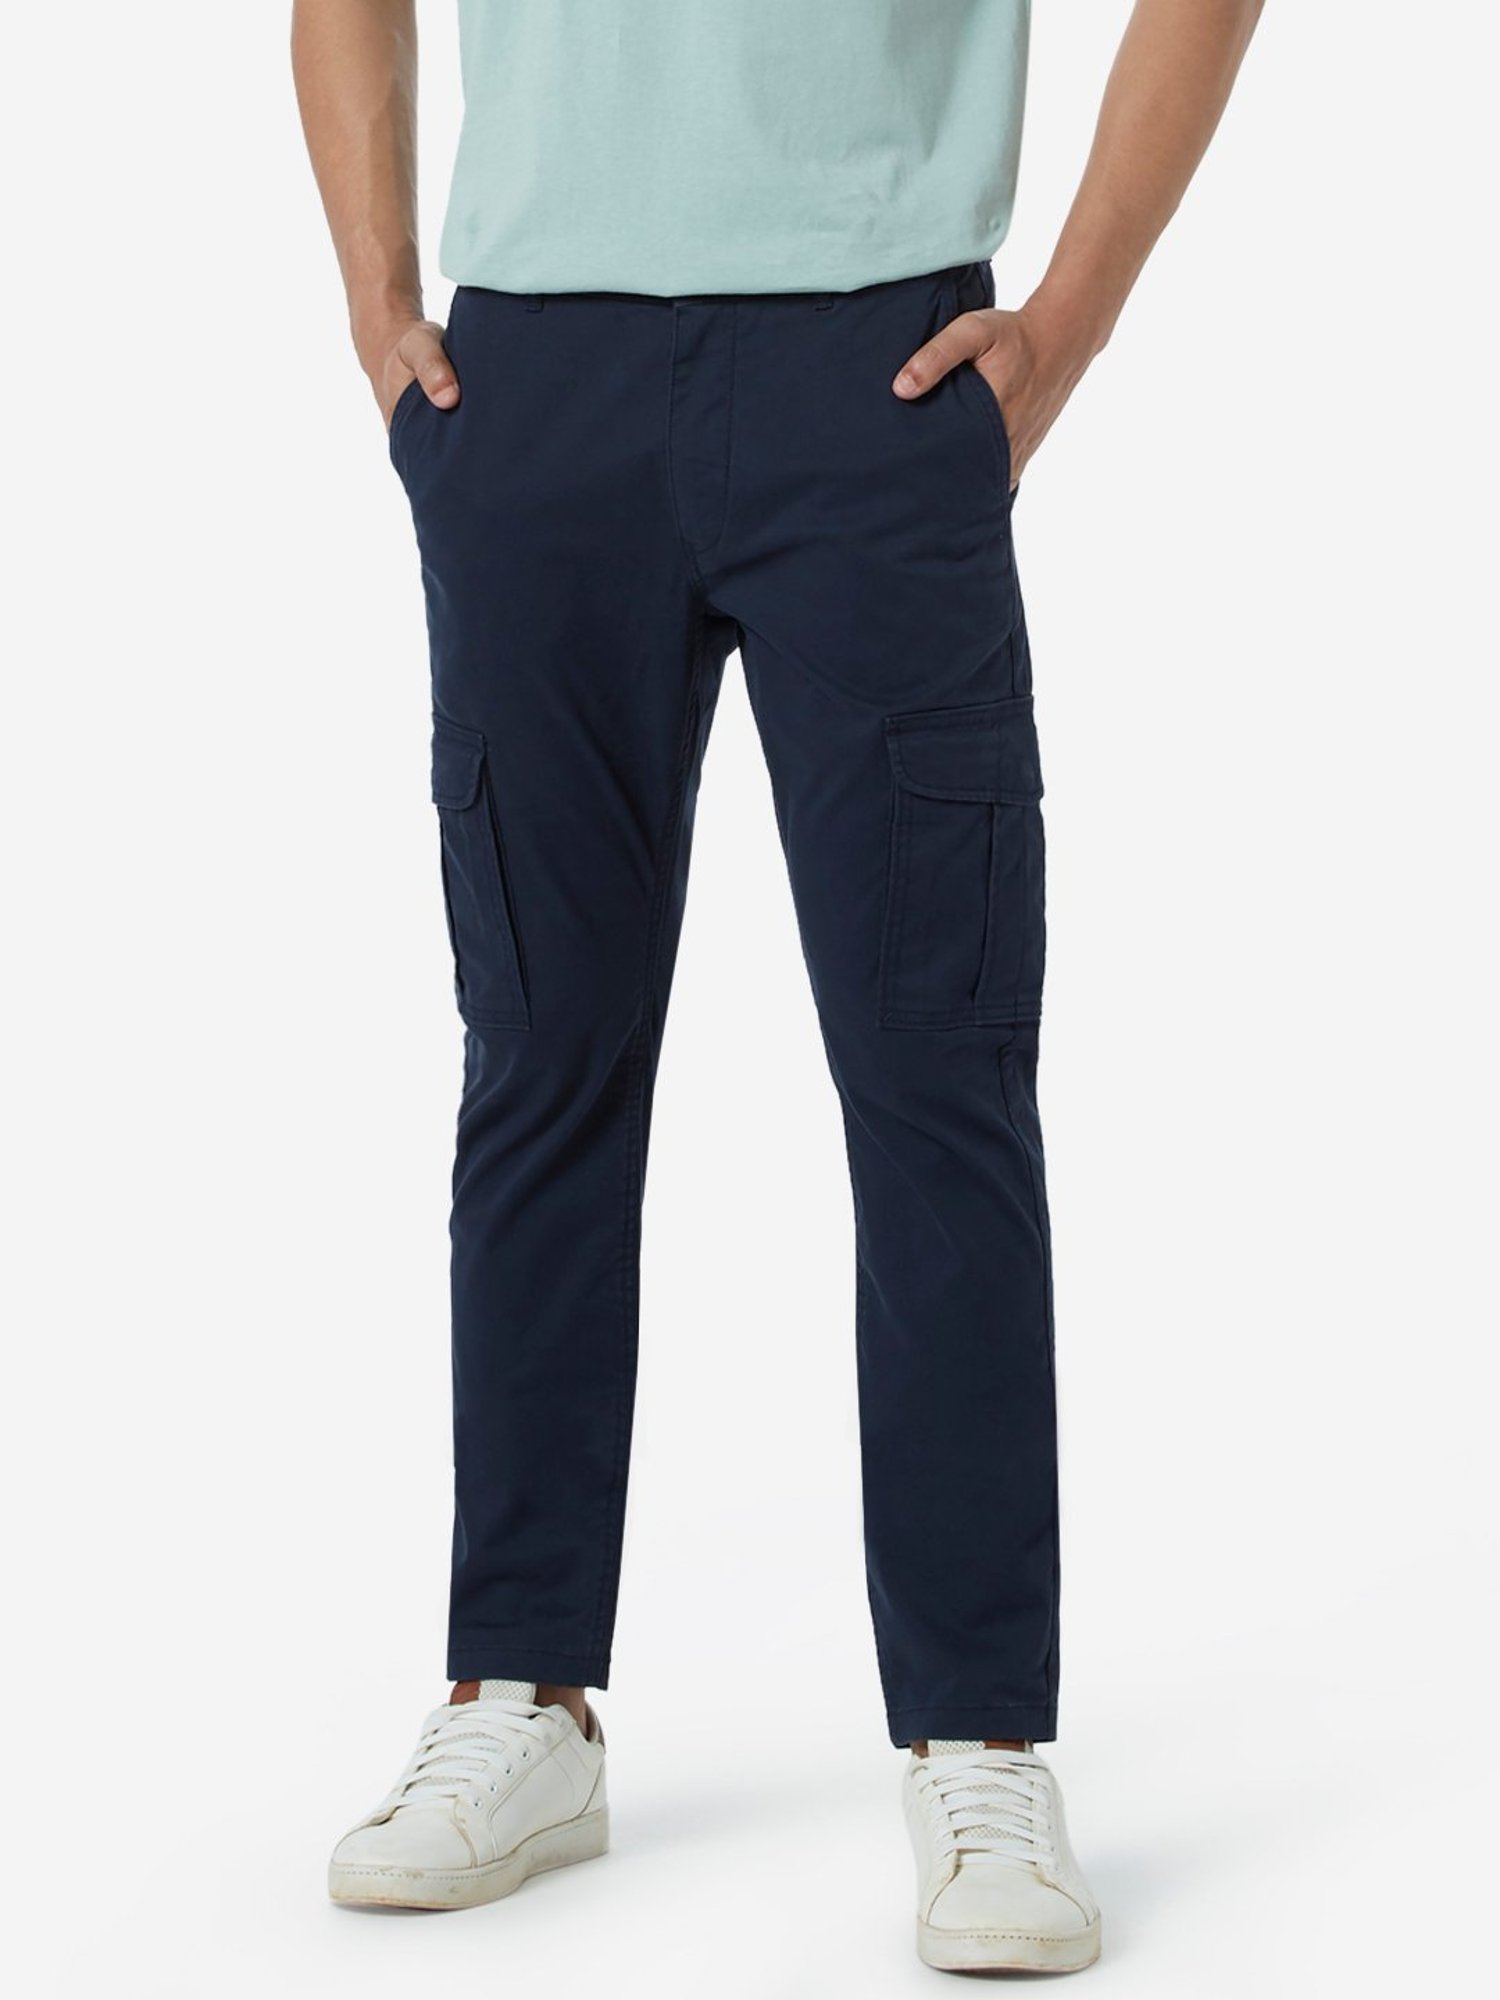 Buy Plus Size Cargo Pants For Men  Big Size Mens Cargo Trousers  Apella